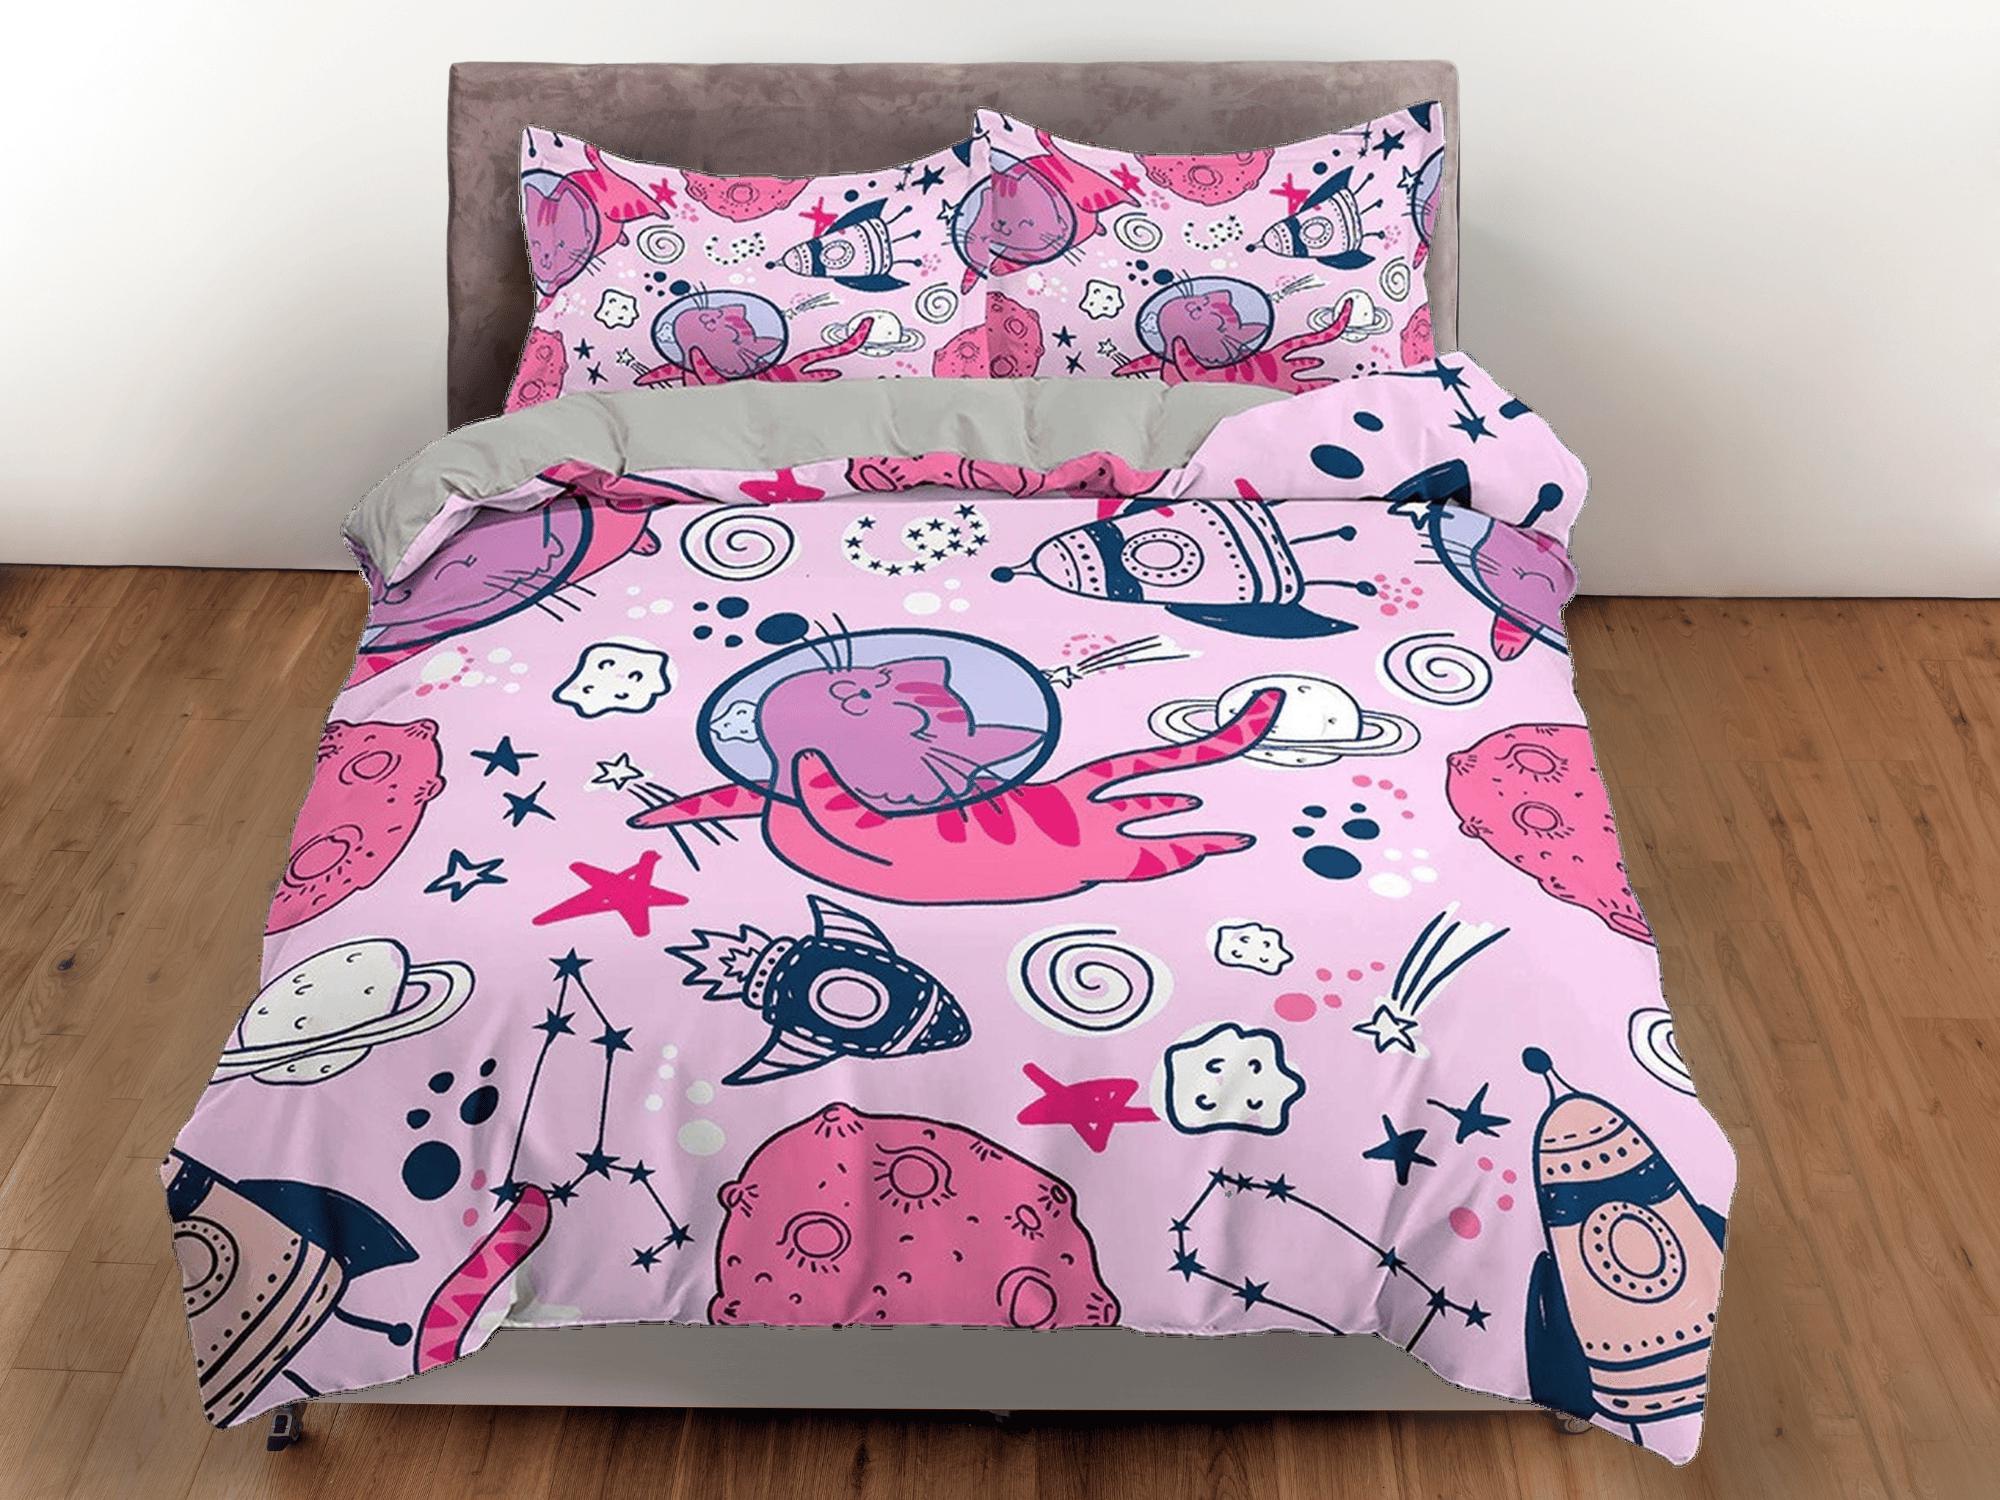 daintyduvet Astronaut Cat in Space Kids Baby Pink Duvet Cover Set, Toddler Bedding, Kids Bedroom, Cute Bedding, Duvet King Queen Full Twin Single